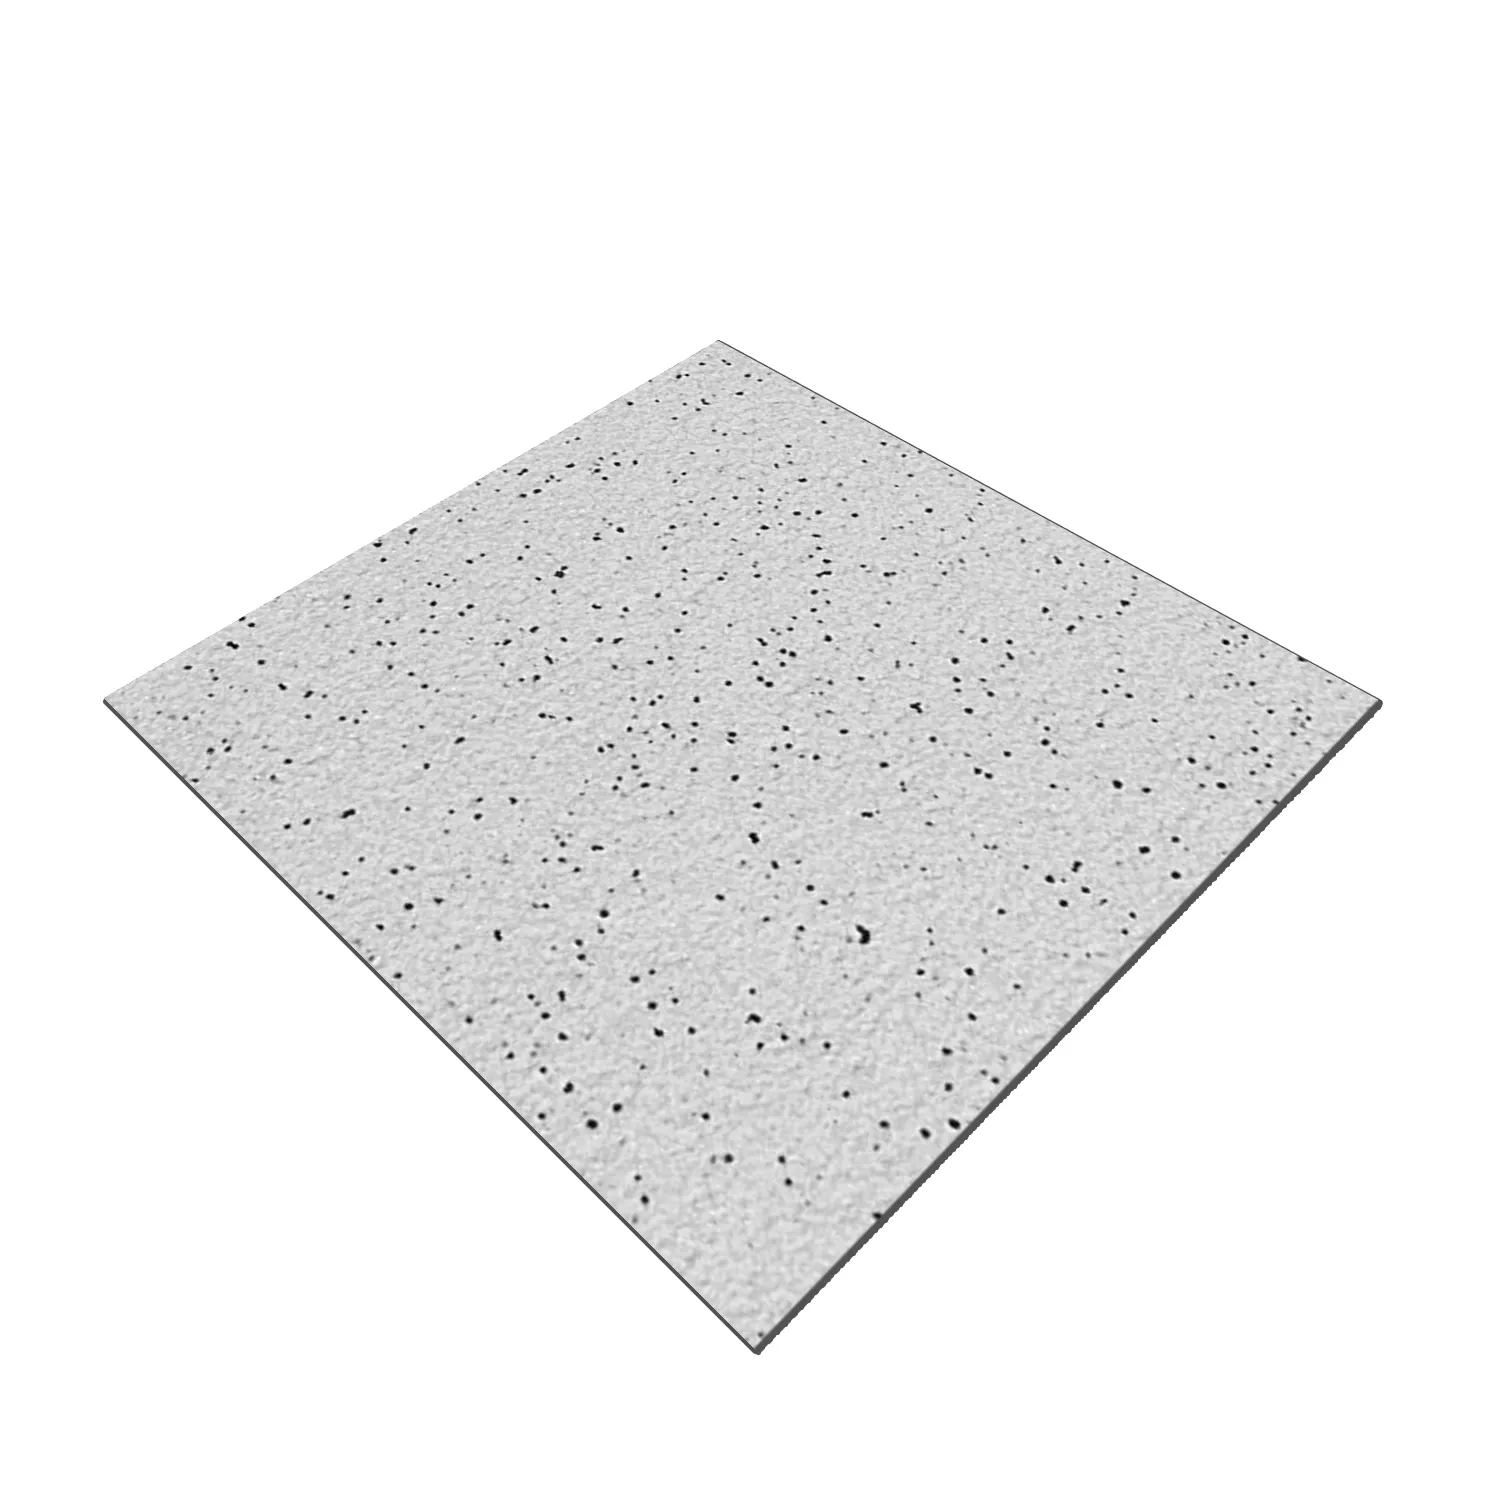 Sample Floor Tiles Fine Grain R10/A Grey 30x30cm